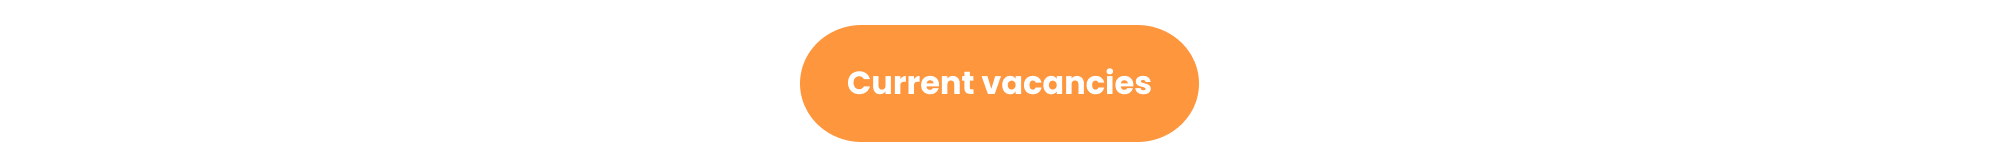 Current vacancies button 